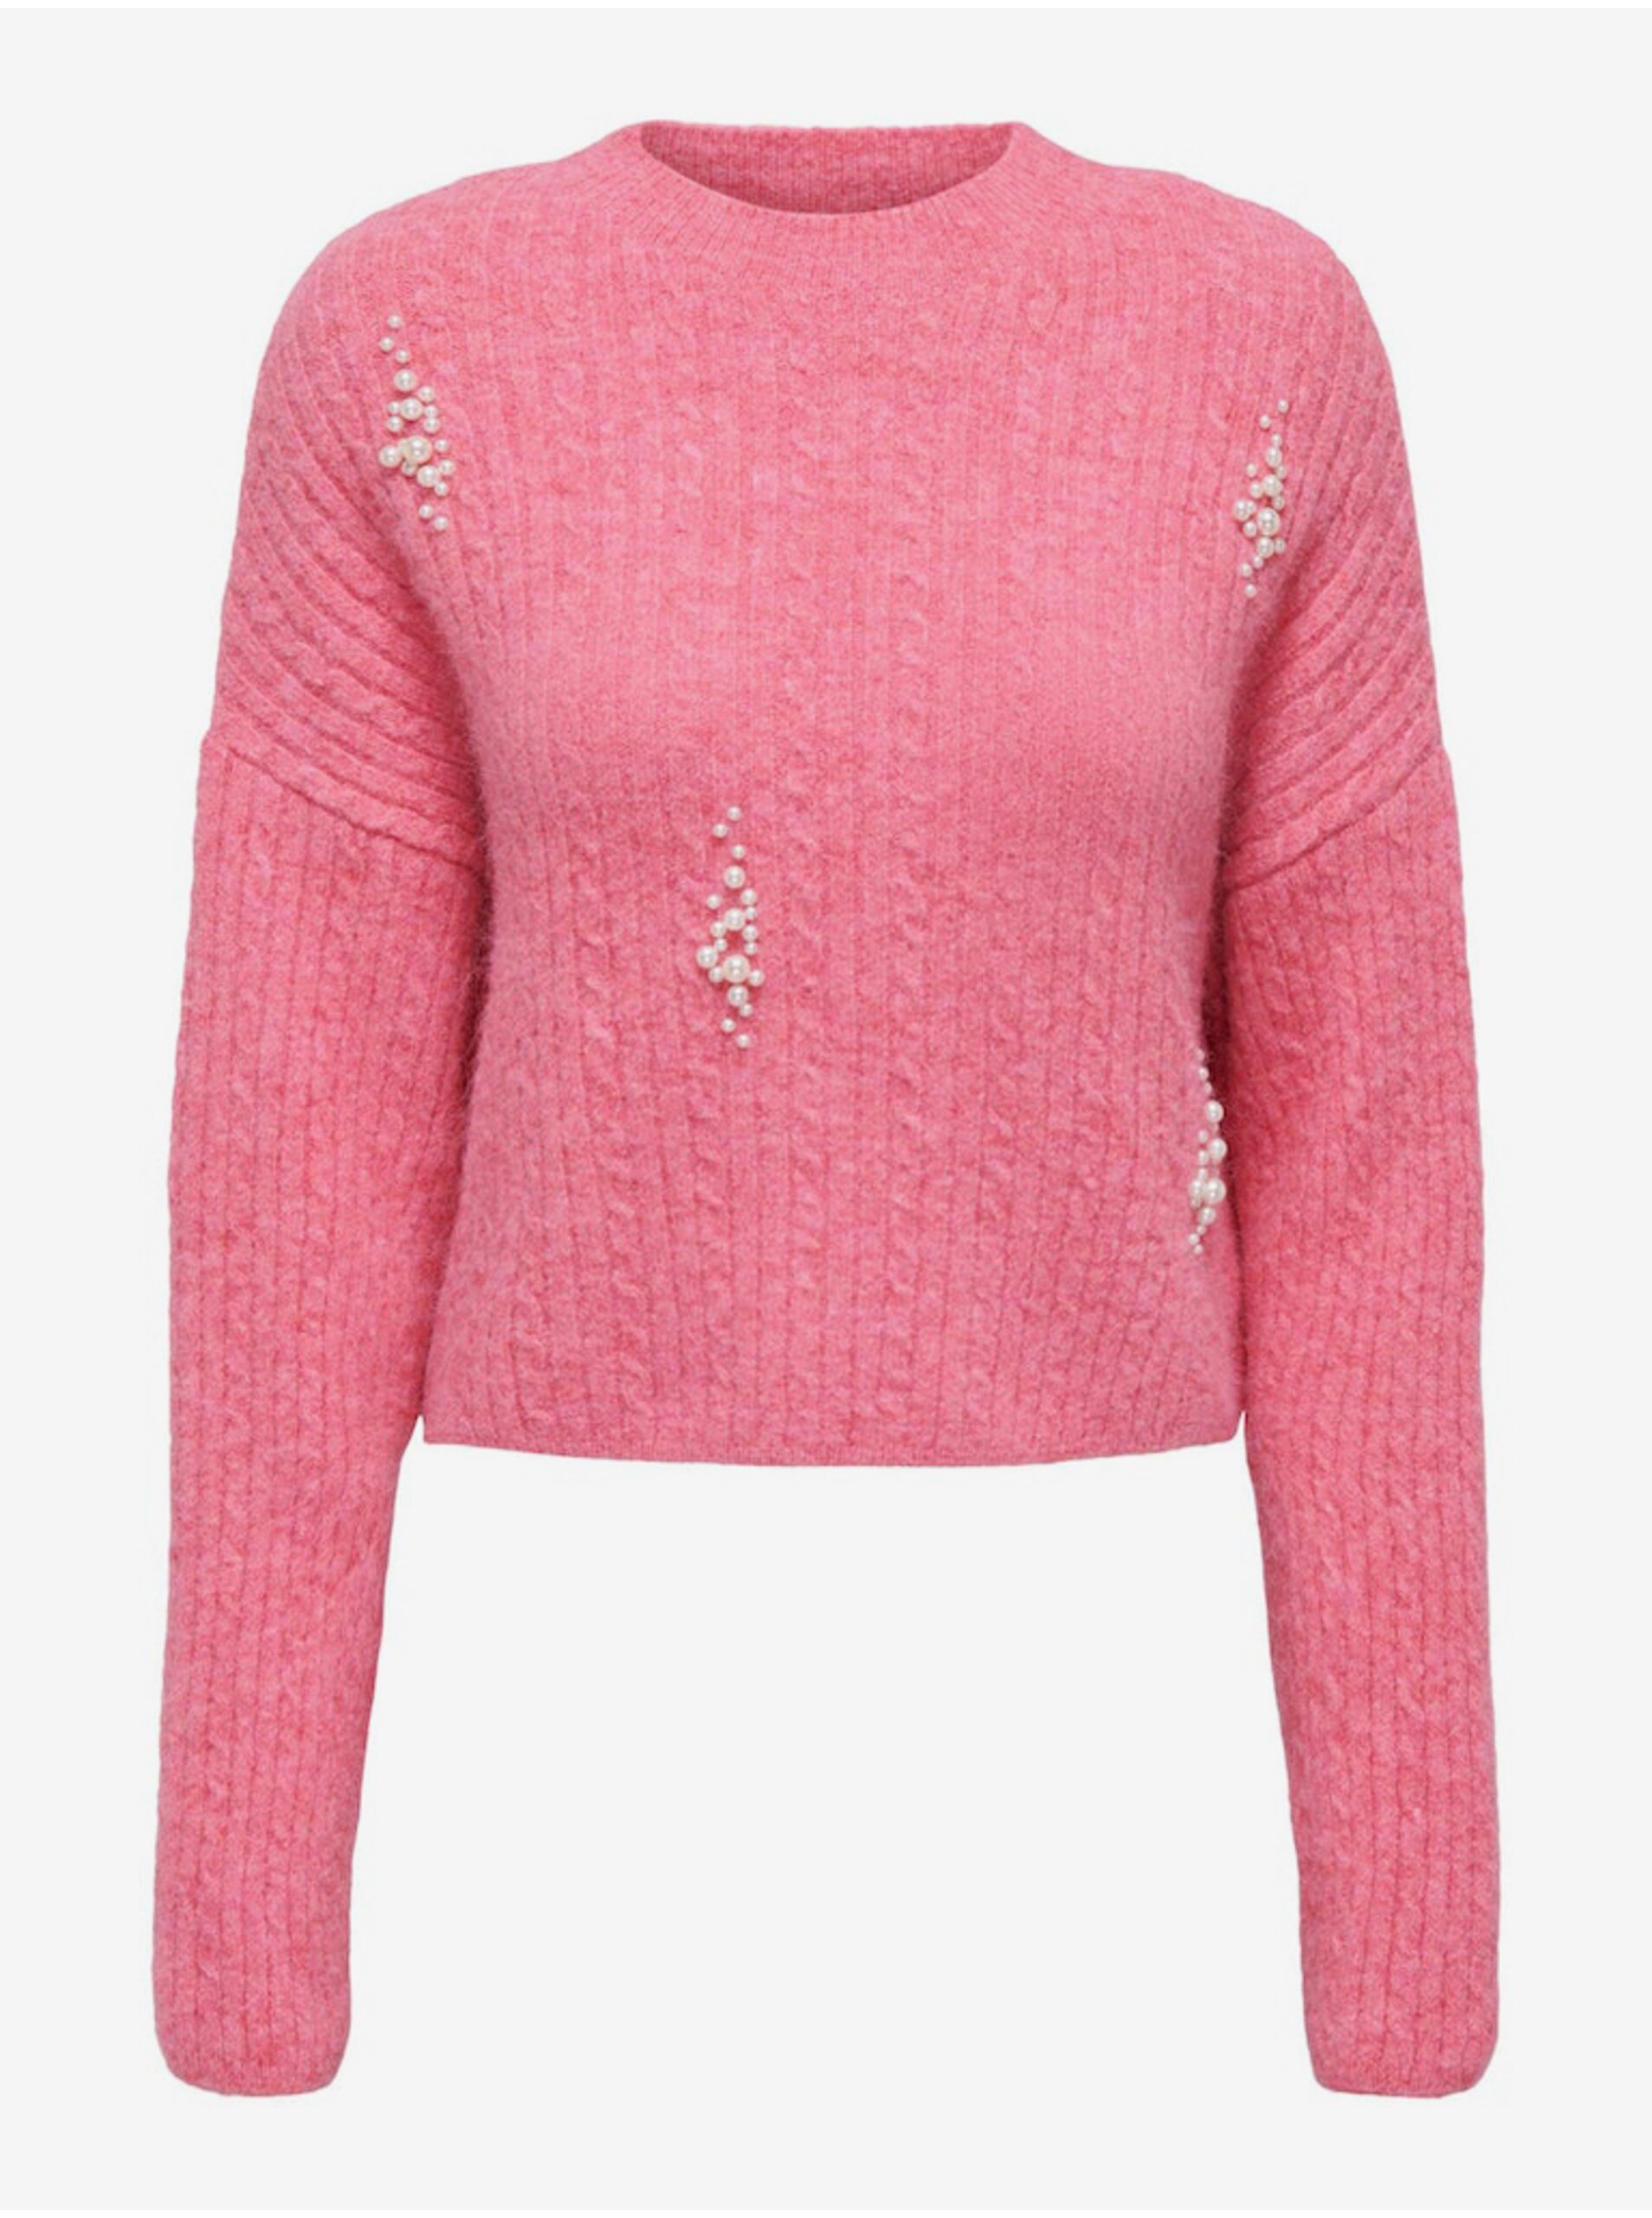 Lacno Ružový dámsky sveter ONLY Marilla